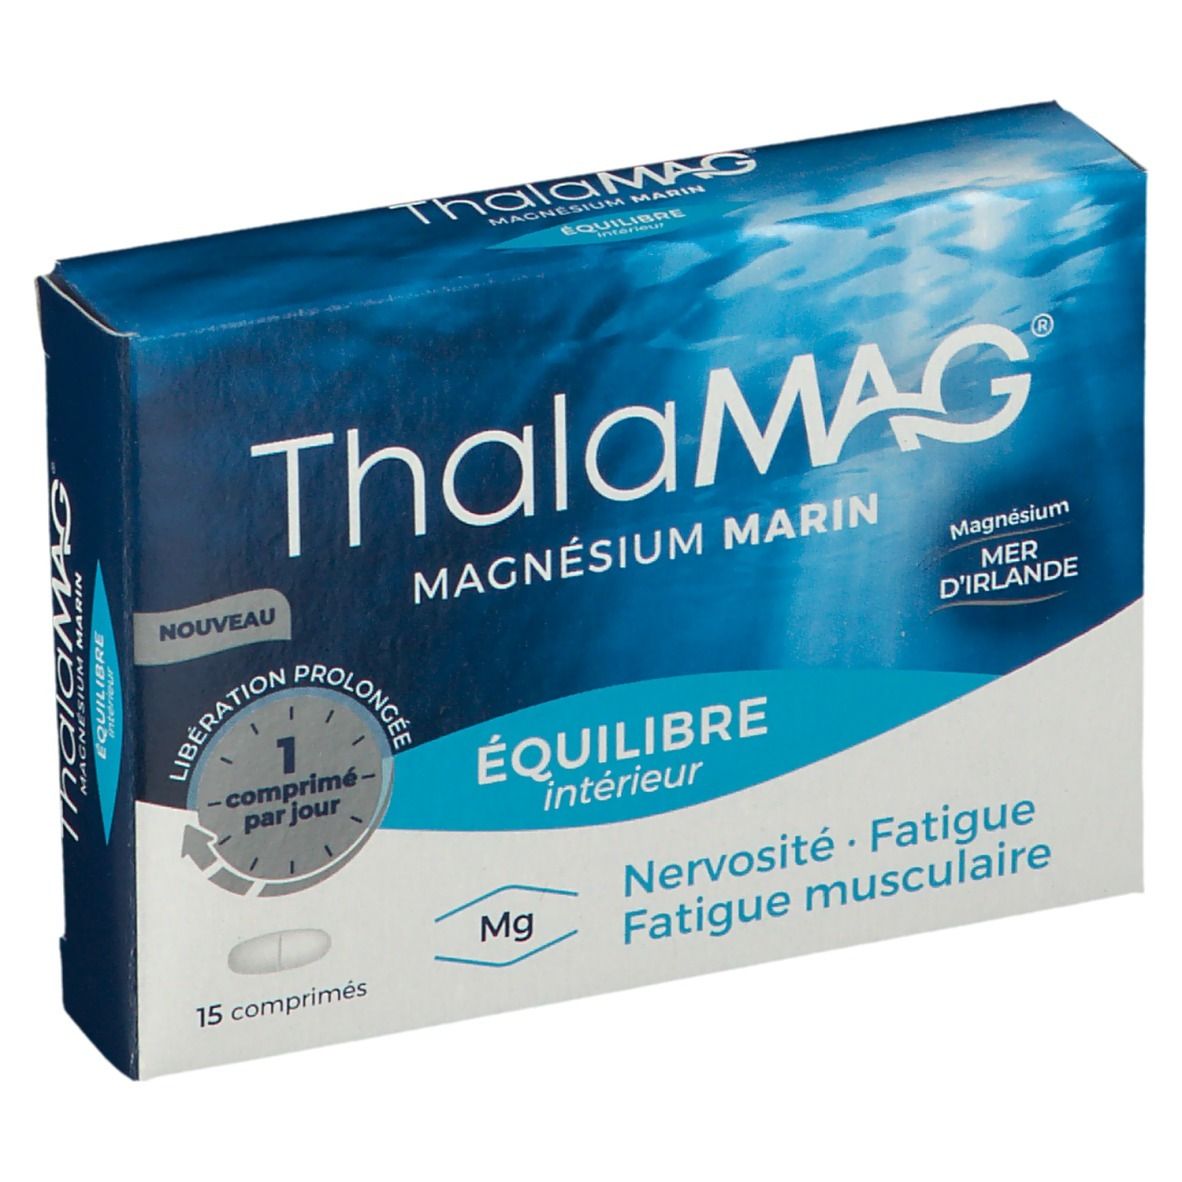 Laboratoires Iprad ThalaMAG® Magnésium Marin Équilibre Intérieur